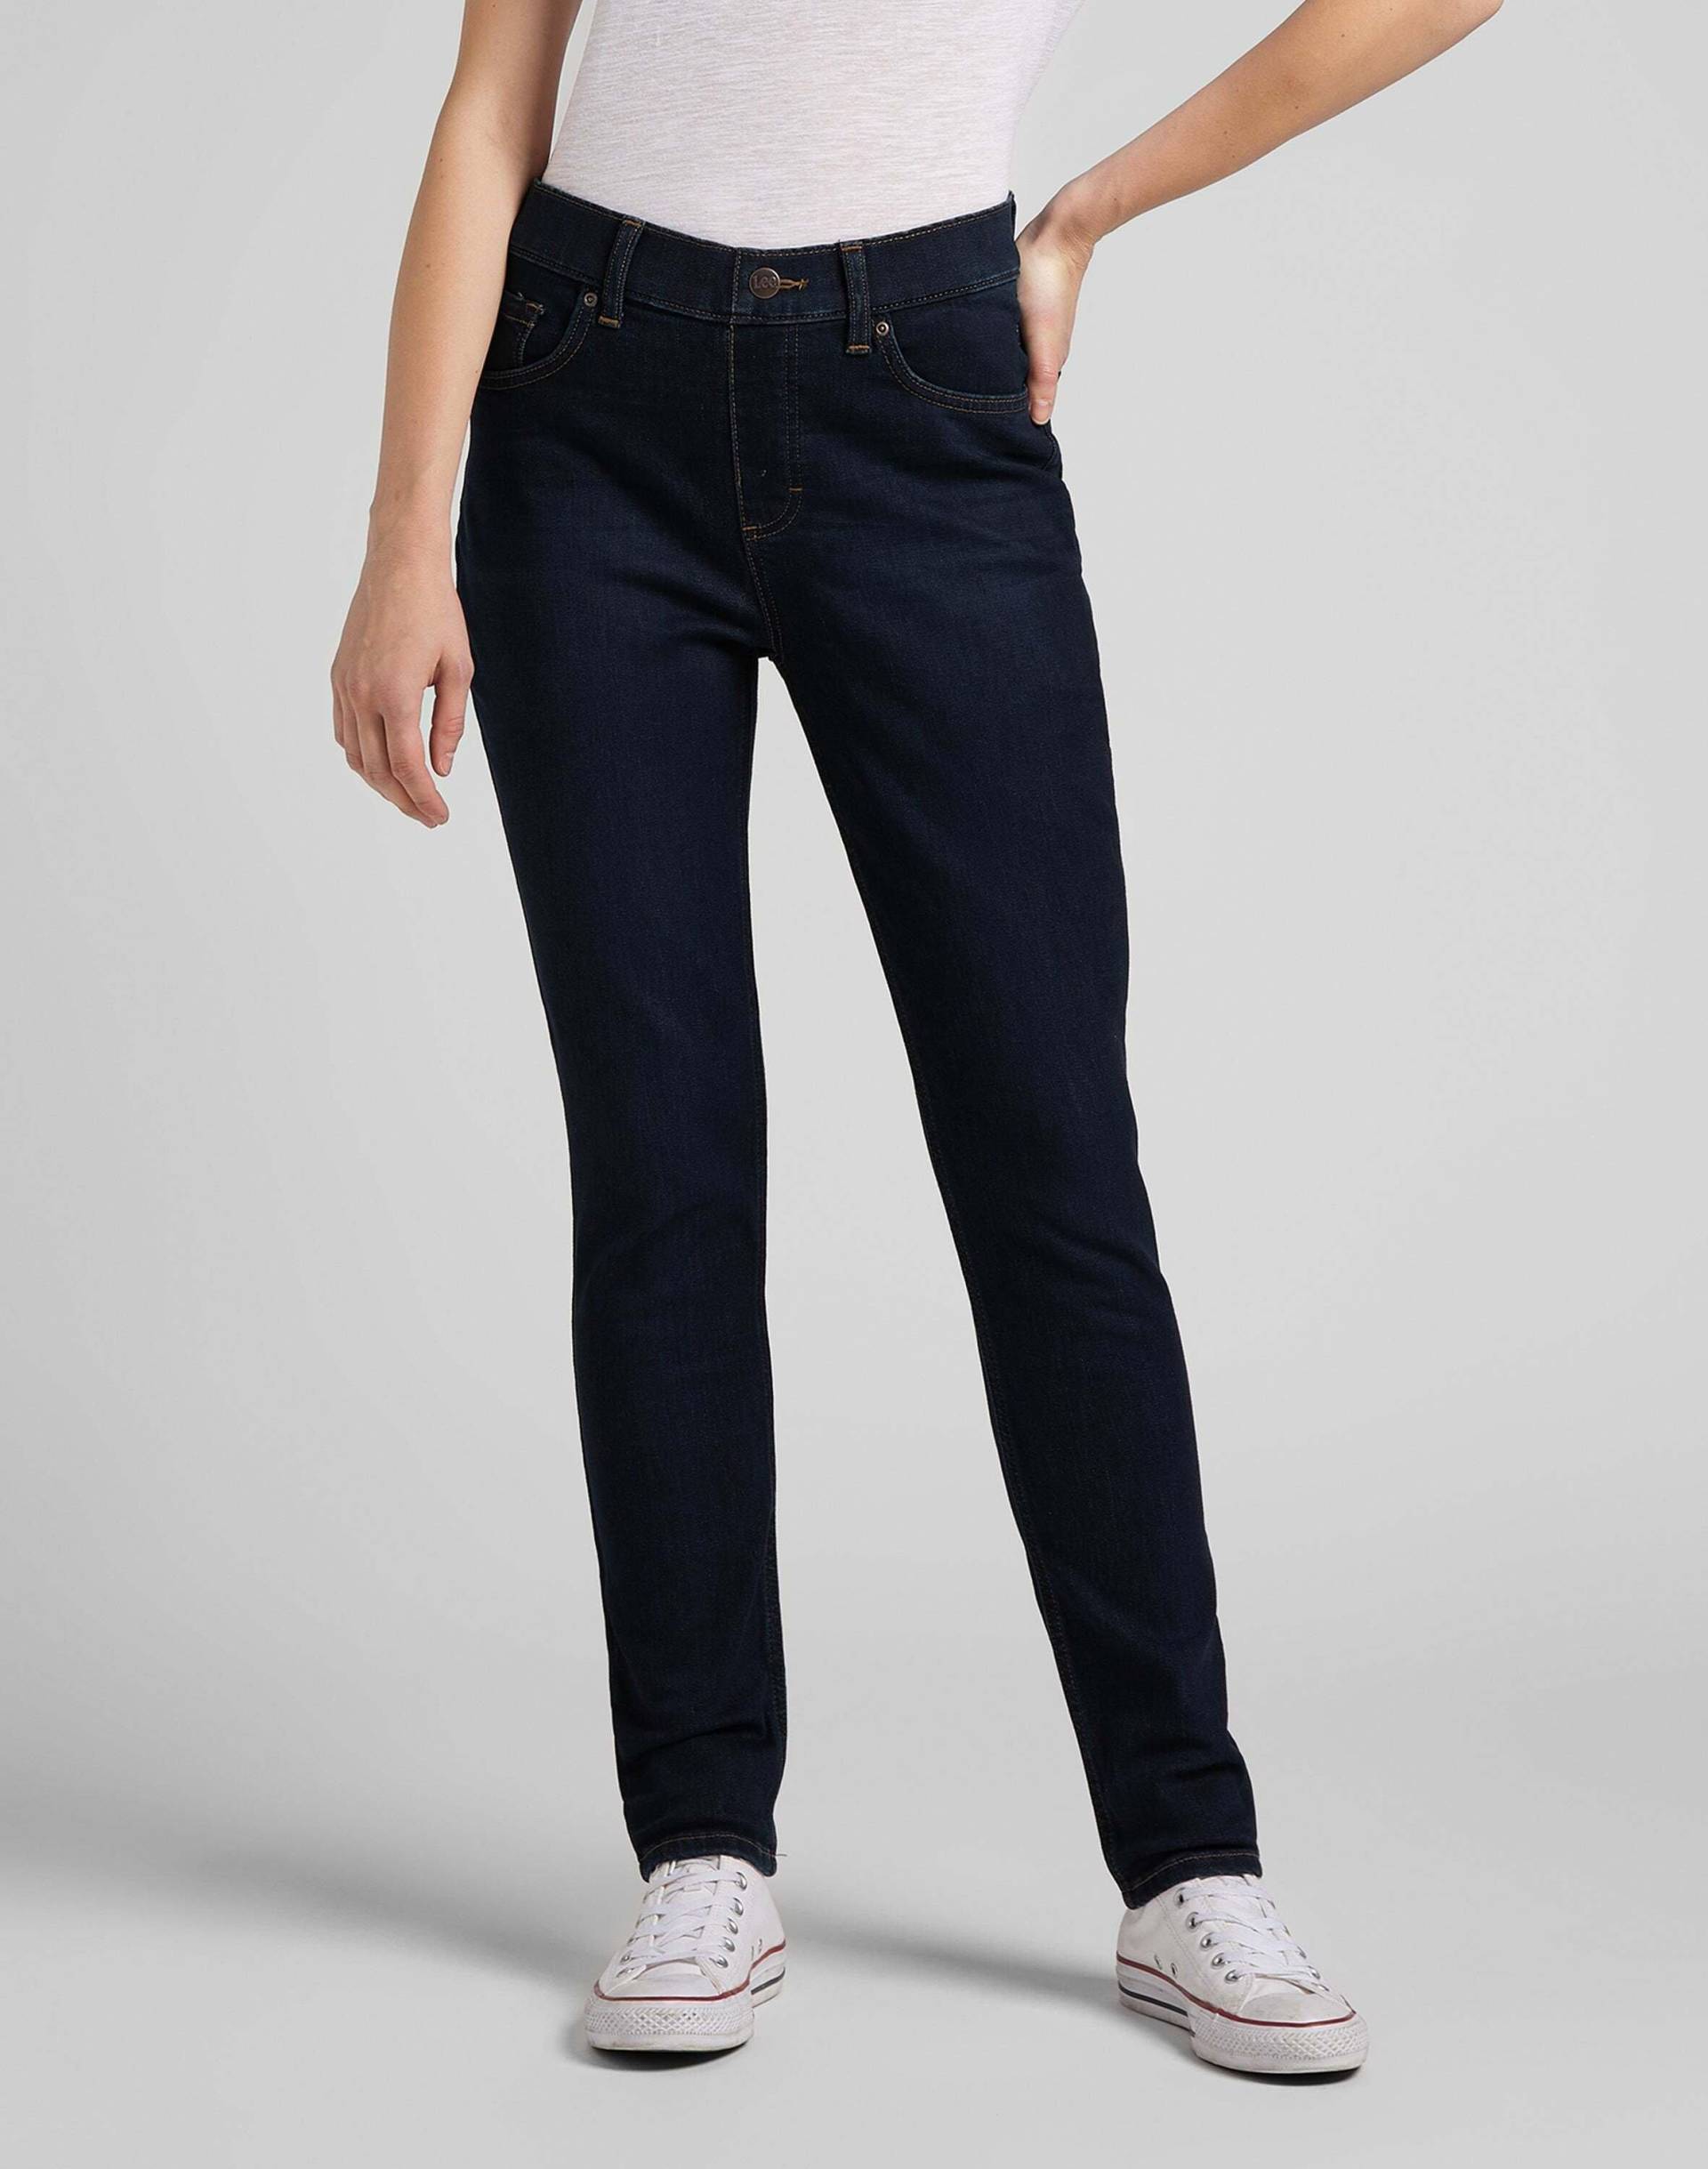 Jeans Skinny Fit Comfort Damen Marine L33/W30 von Lee